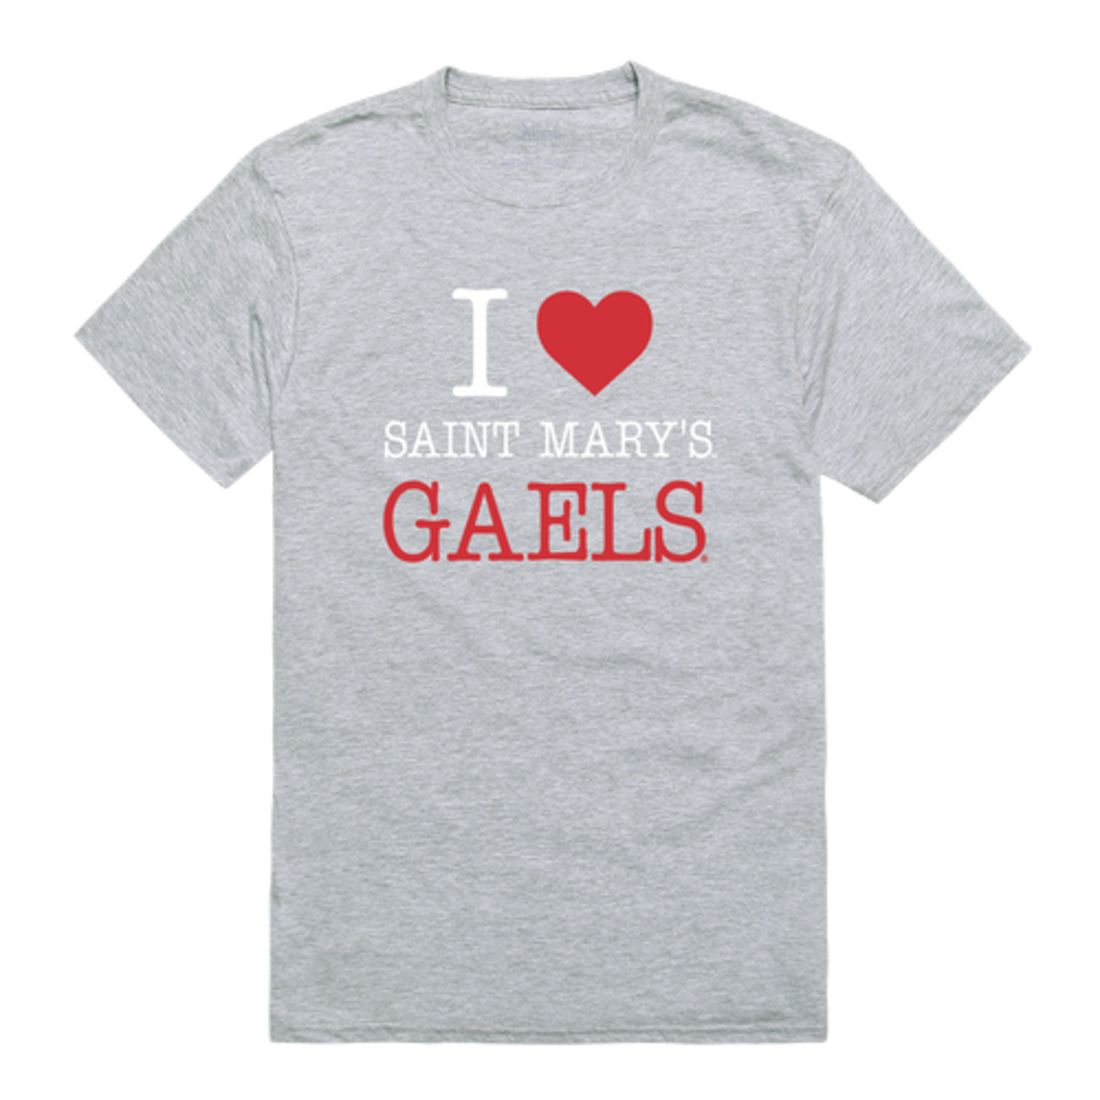 I Love Saint Mary's College of California Gaels T-Shirt Tee